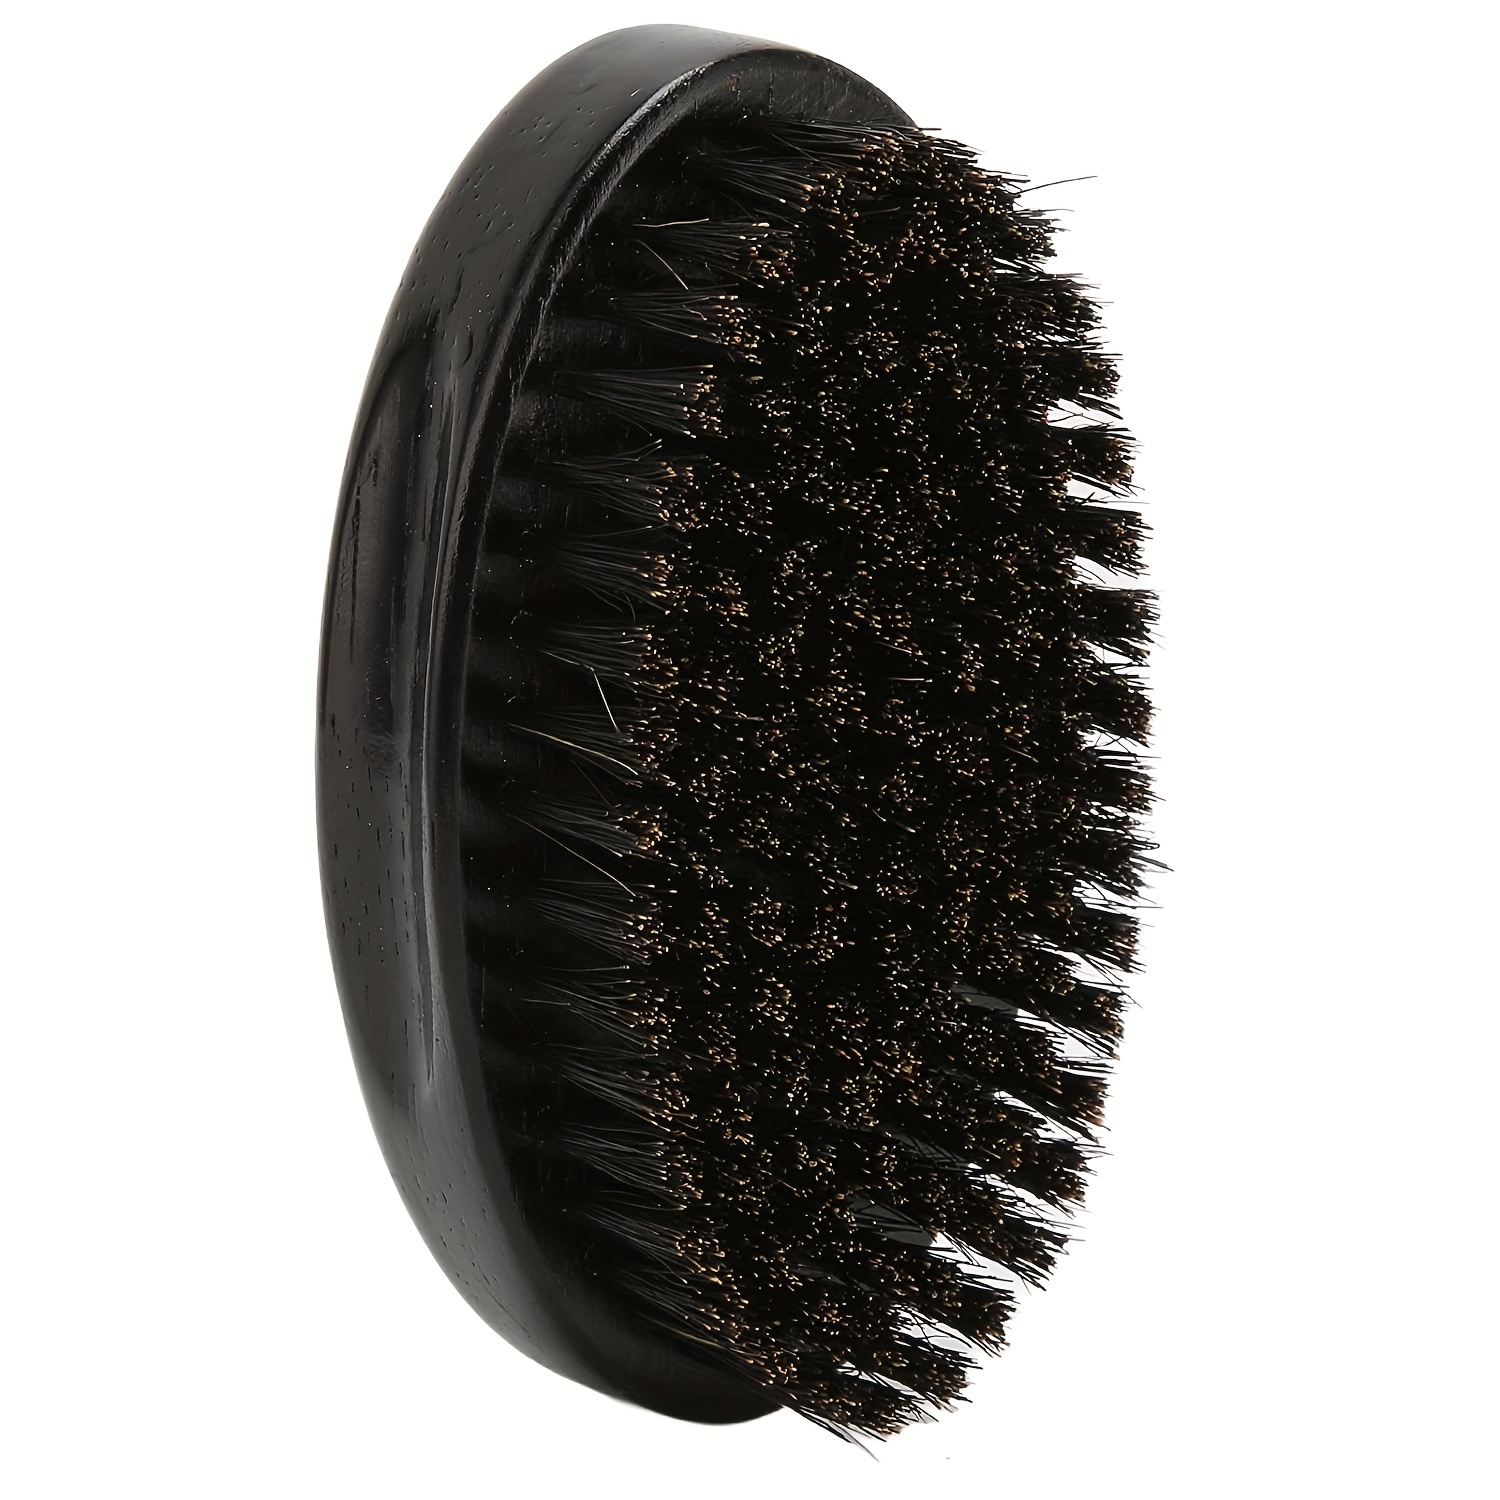 Mens Wild Boar Bristle Hair Brush - Stiff Bristles Black Walnut